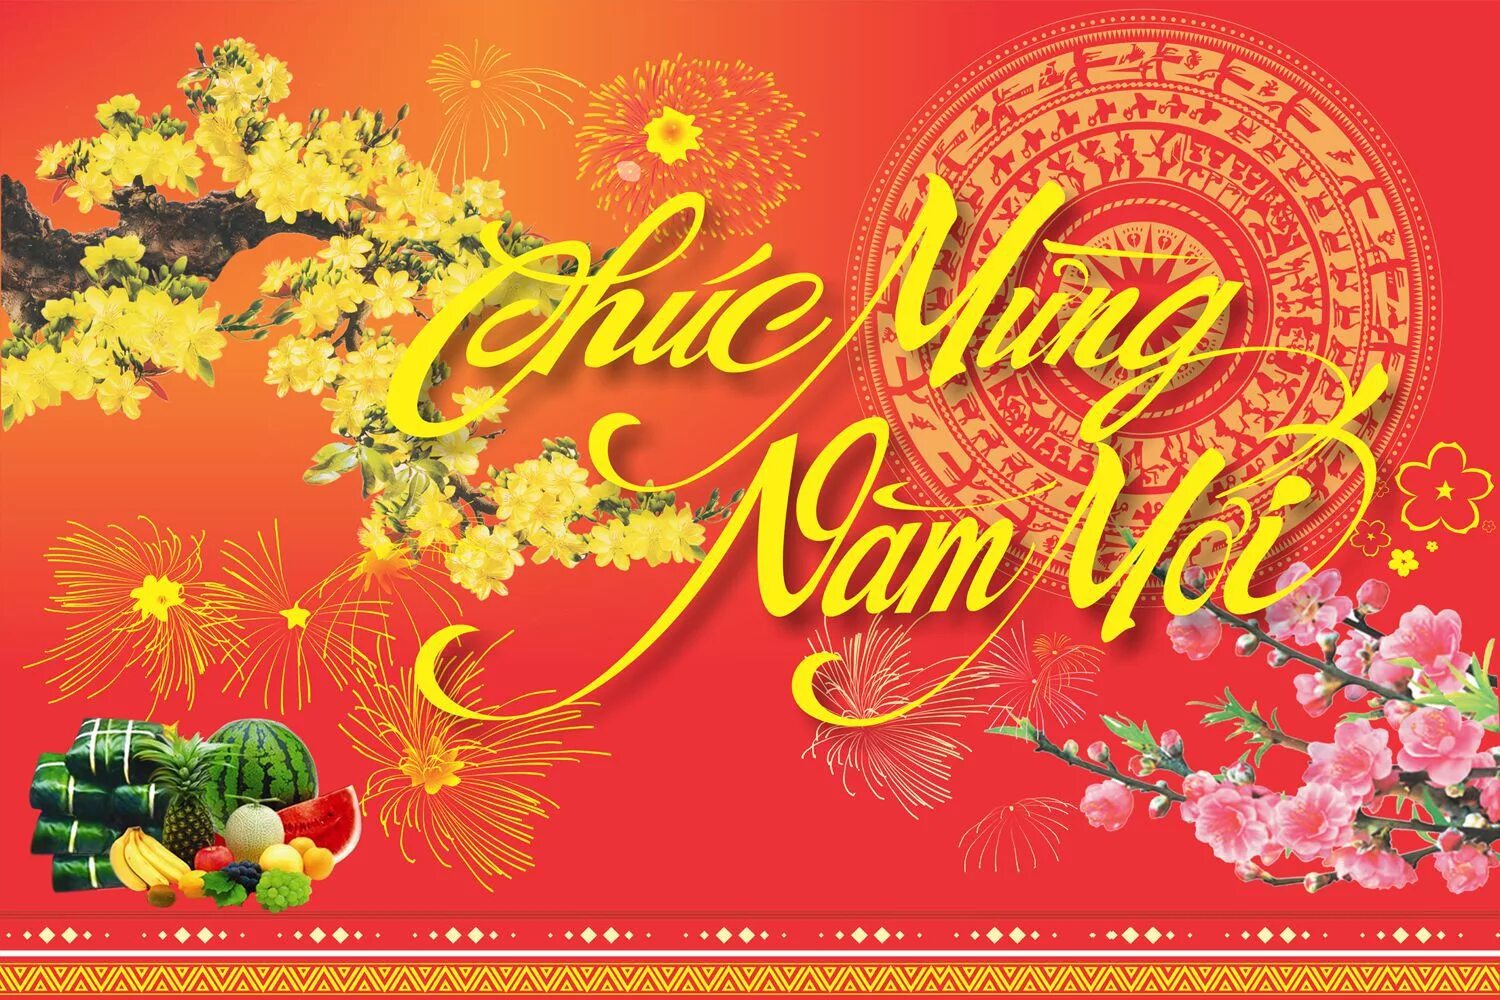 Chuc mung nam moi открытки. Chúc mung nam moi. Поздравление с вьетнамским новым годом. Chuc mung nam moi 2022. День тет